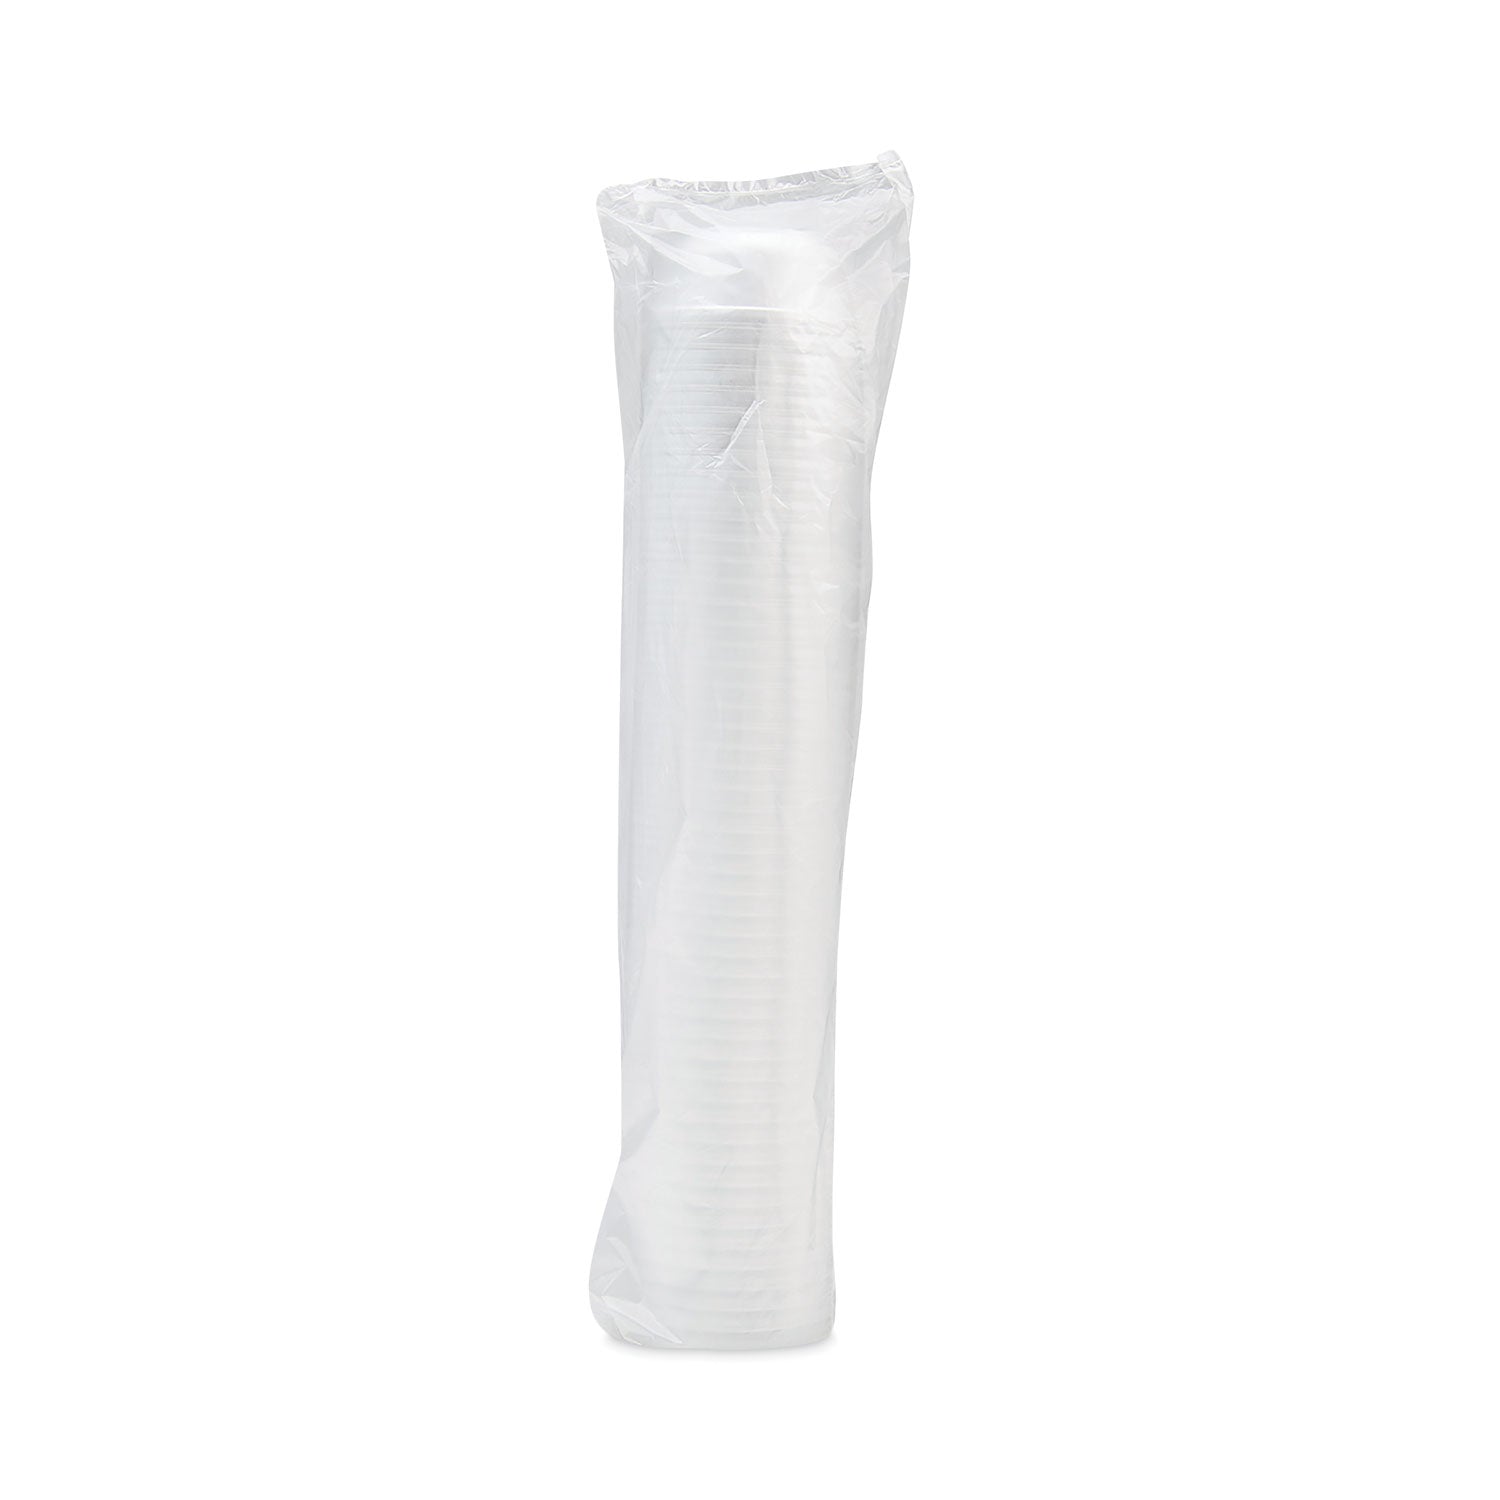 Insulated Foam Bowls, 12 oz, White, 50/Pack, 20 Packs/Carton - 